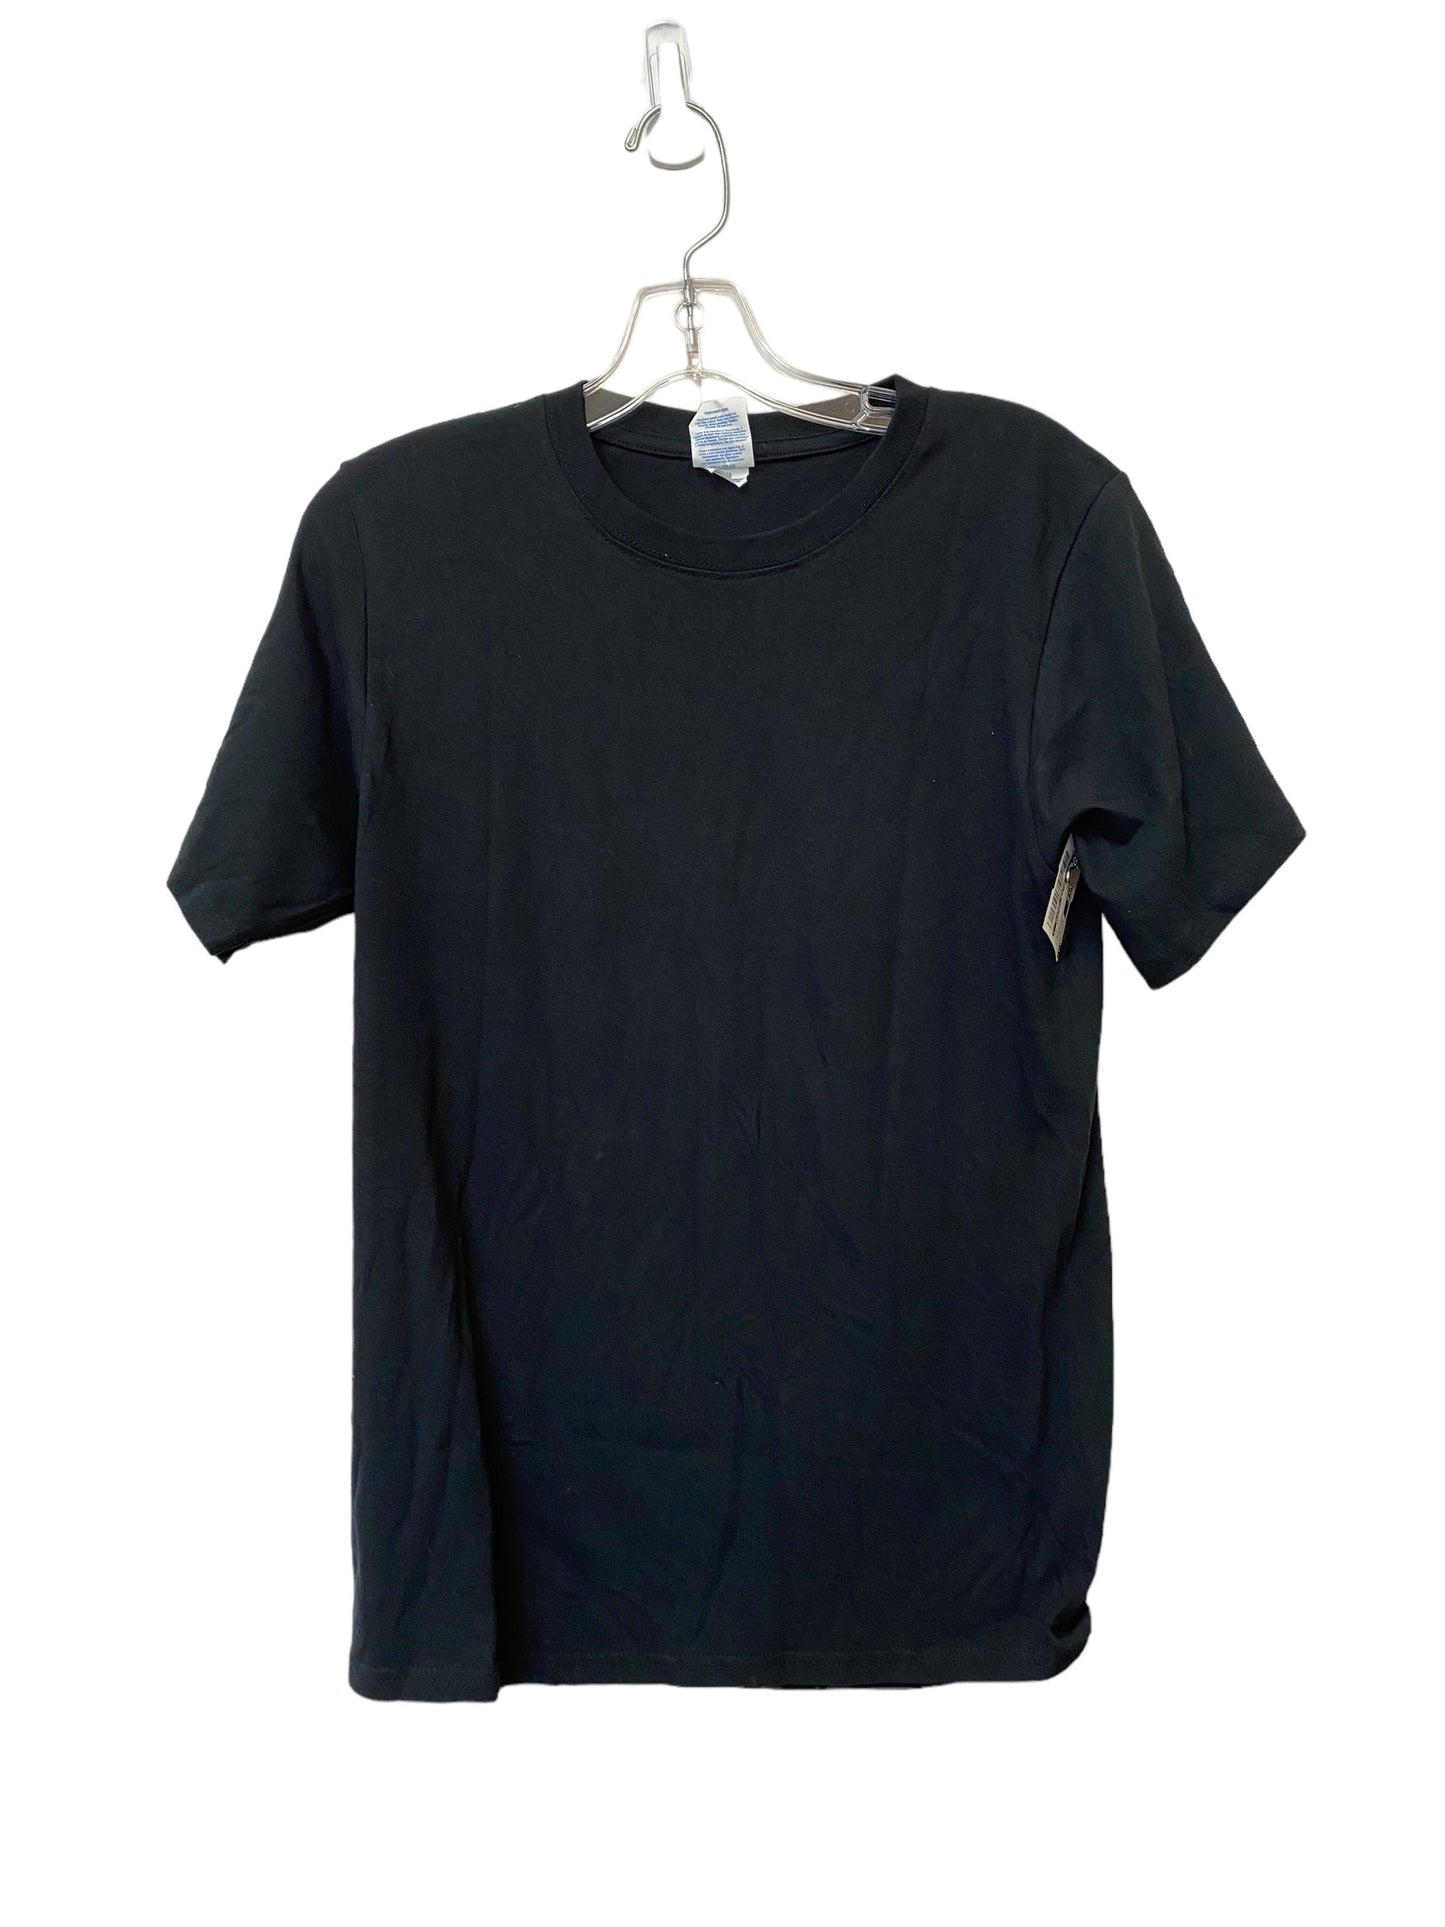 Black Top Short Sleeve Clothes Mentor, Size Petite   S